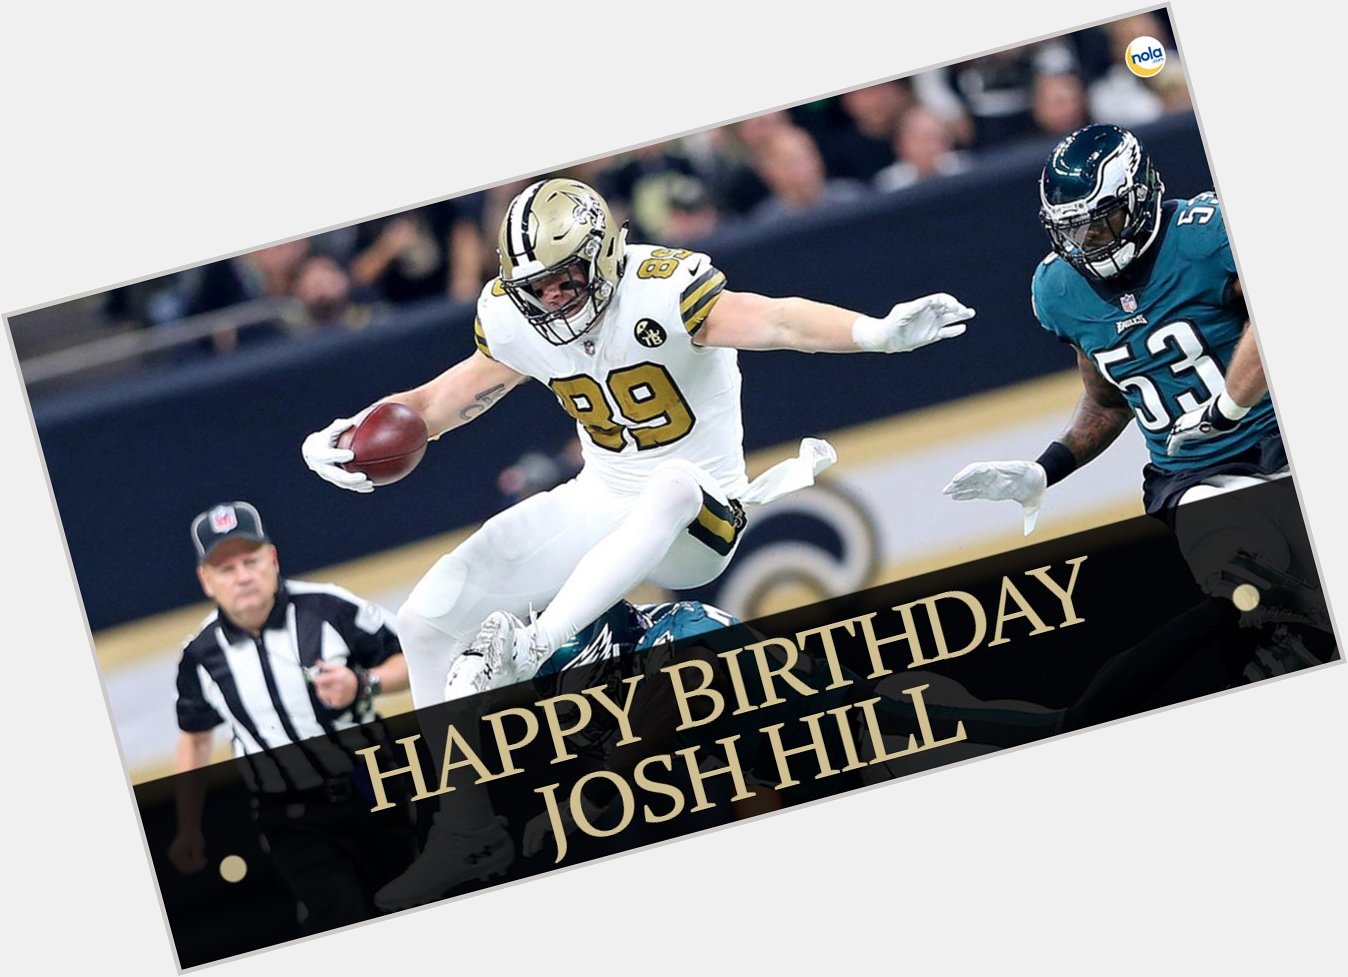 Happy birthday, Josh Hill!   